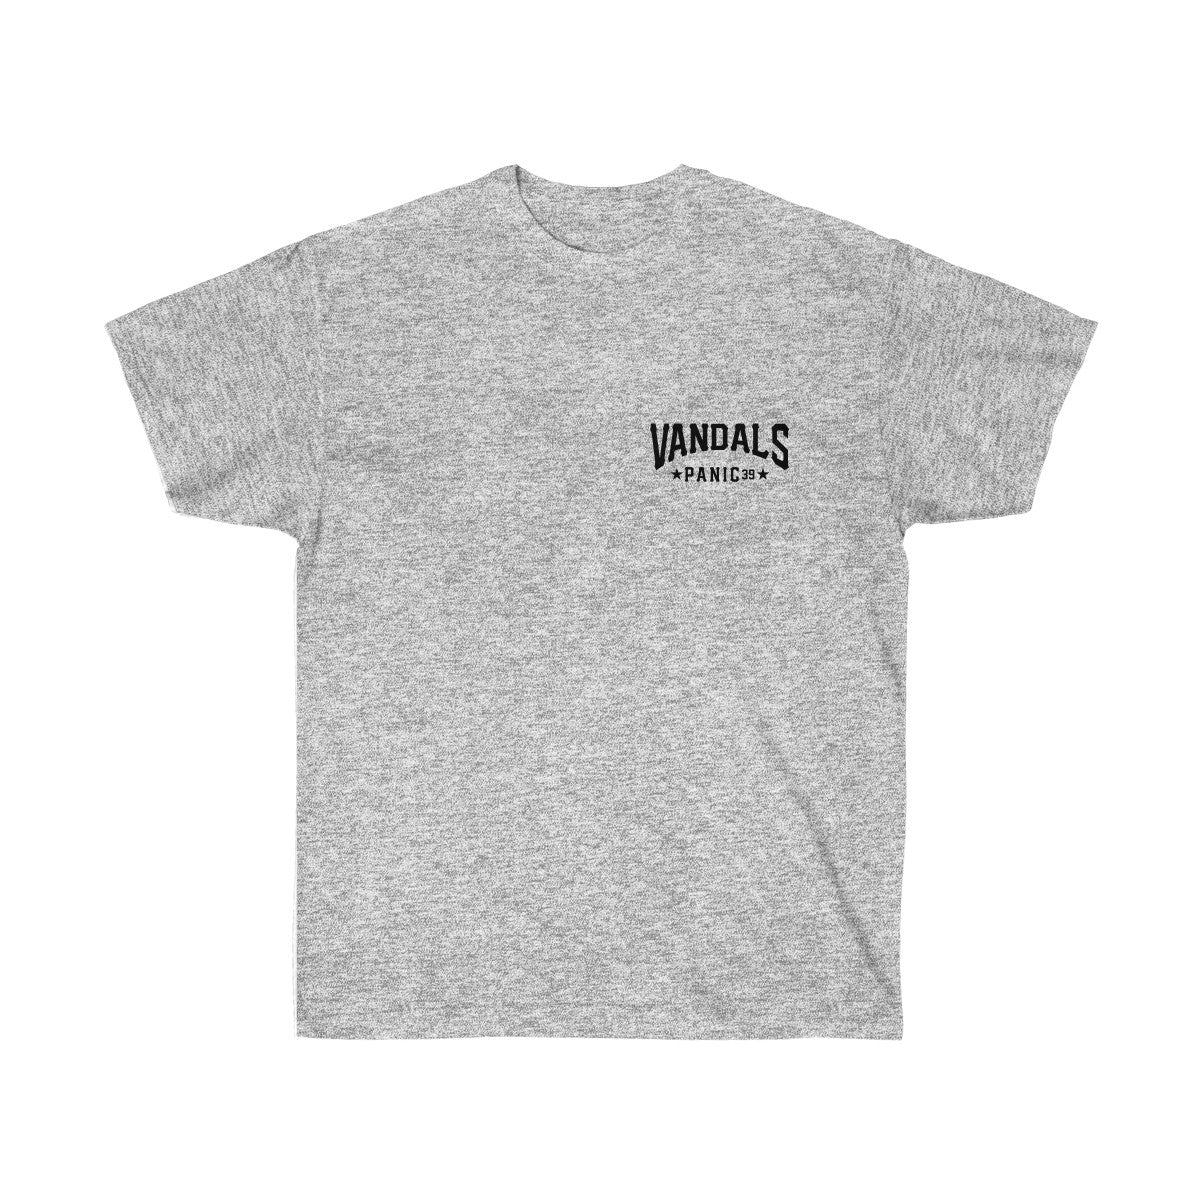 Panic 39 Mens Vandals T-Shirt - Black Print - bboy clothes